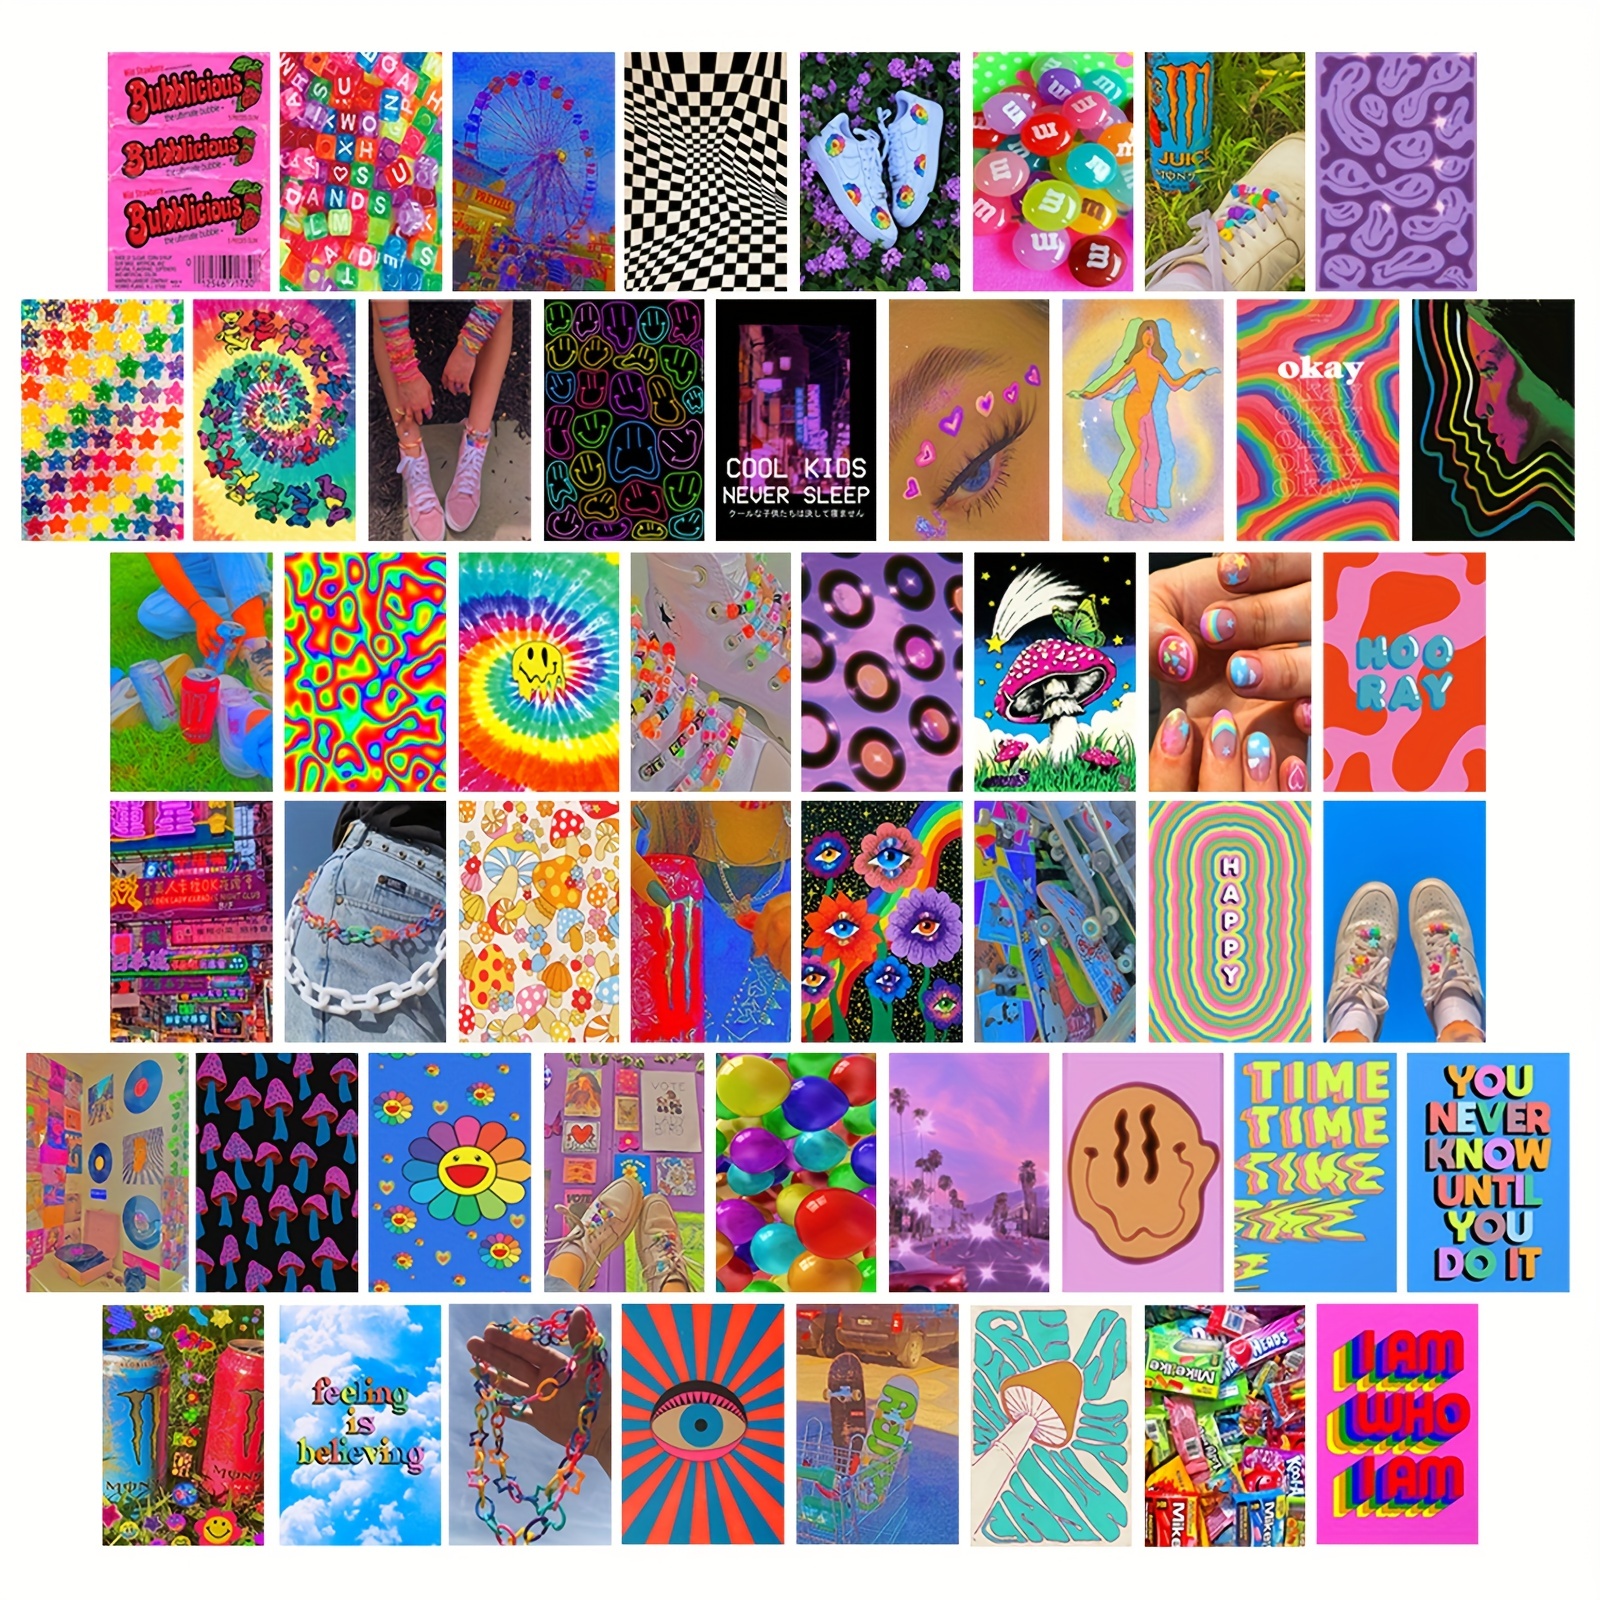 FIDRTH DIY Wall Collage Kit for Teen Girls - Craft Kits Birthday